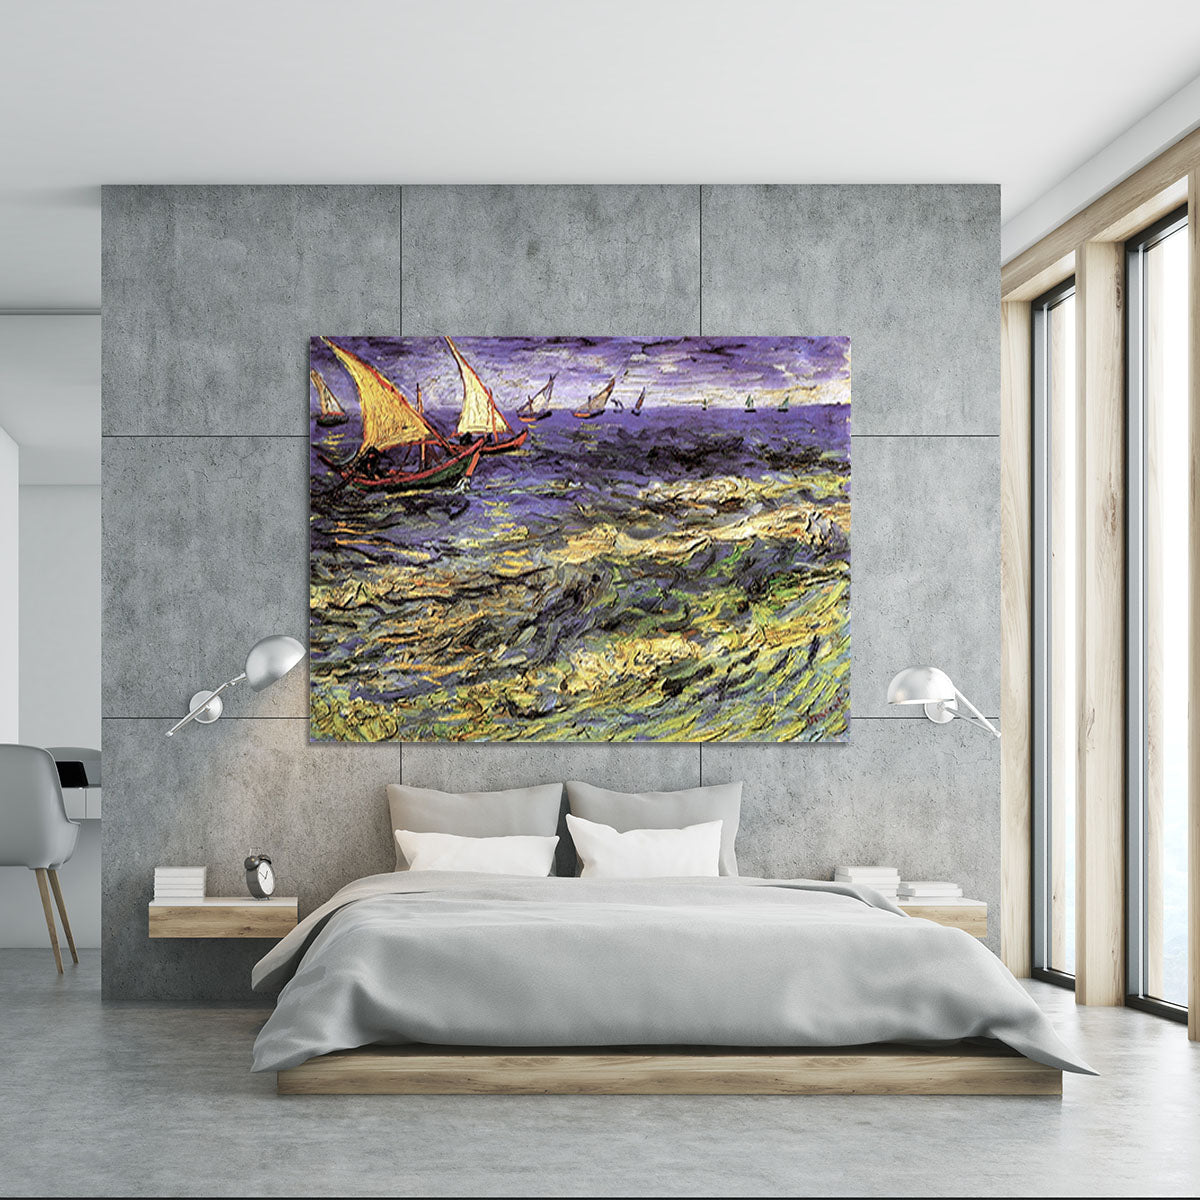 Seascape at Saintes-Maries by Van Gogh Canvas Print or Poster - Canvas Art Rocks - 5